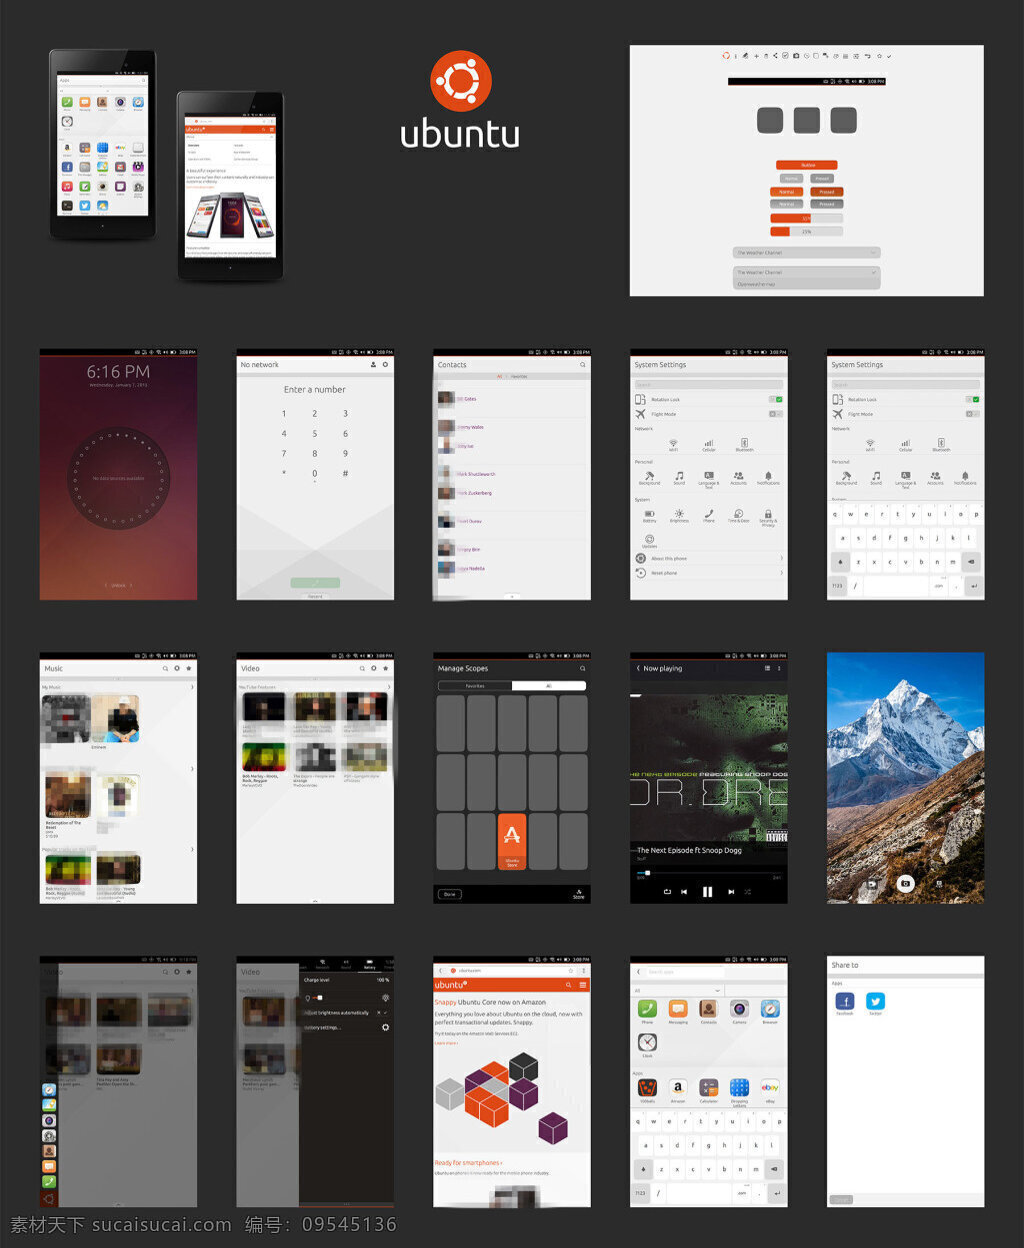 ubuntu 触摸 移动 手机 app 界面 ui gui